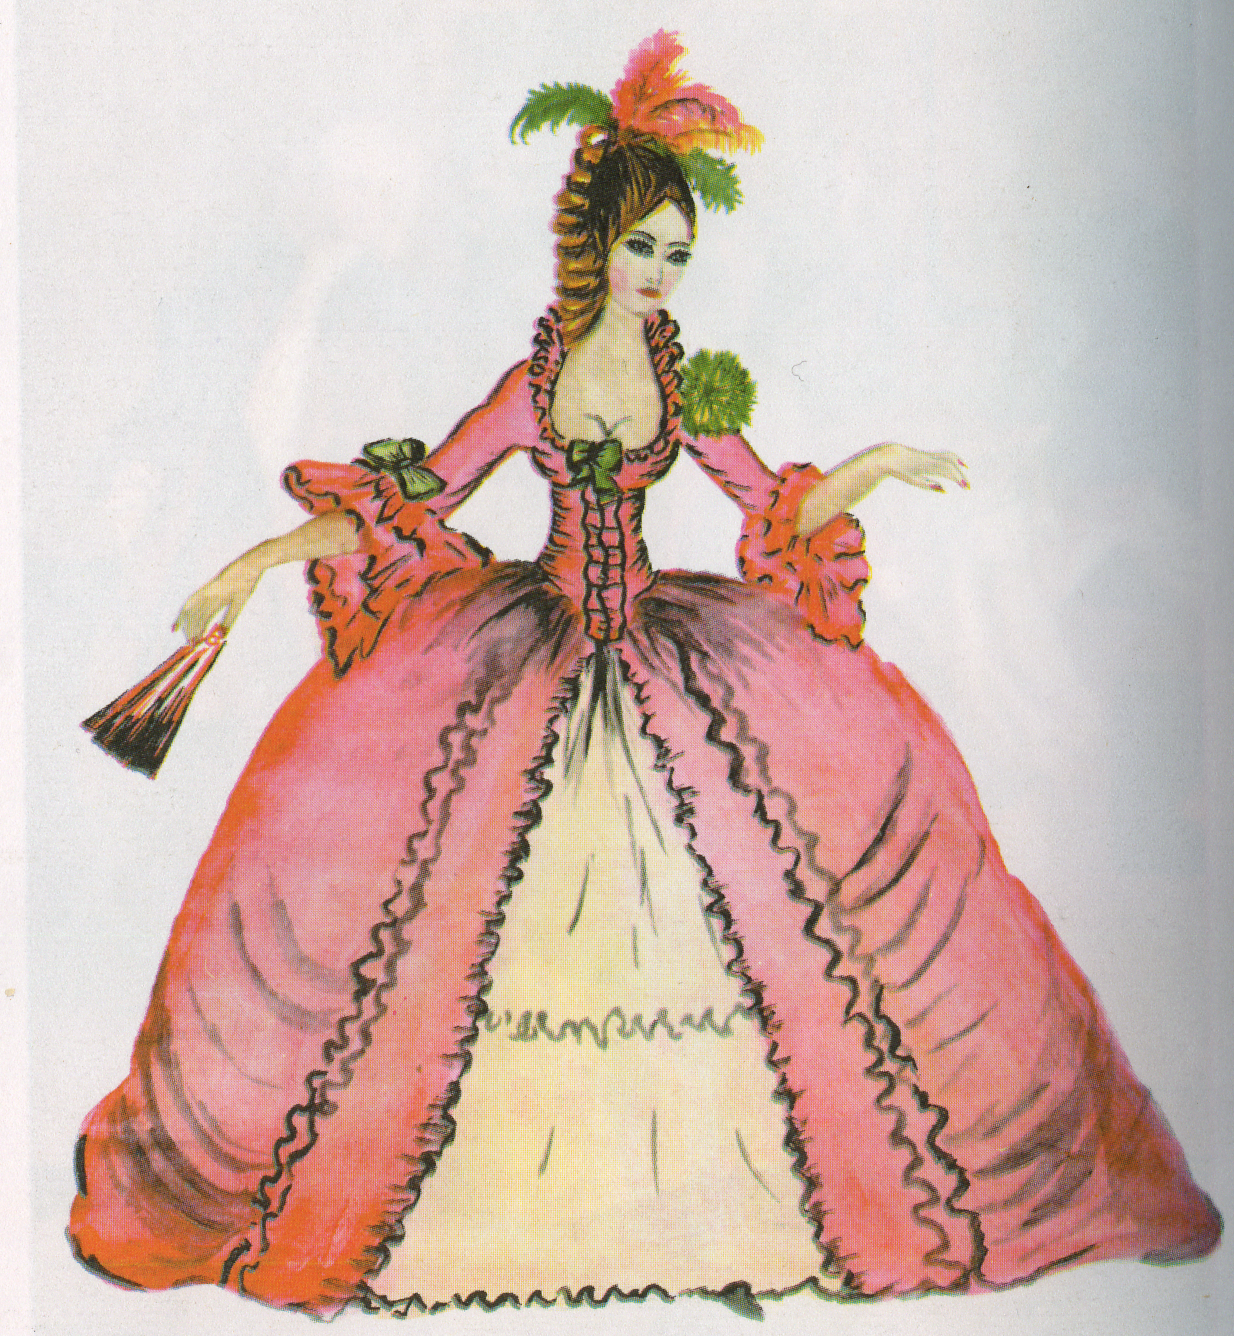 Бал 17 века рисунок. Костюм эпохи Барокко. Платья эпохи Барокко. Французский костюм стиля Барокко. Платье в стиле Барокко рисунок.